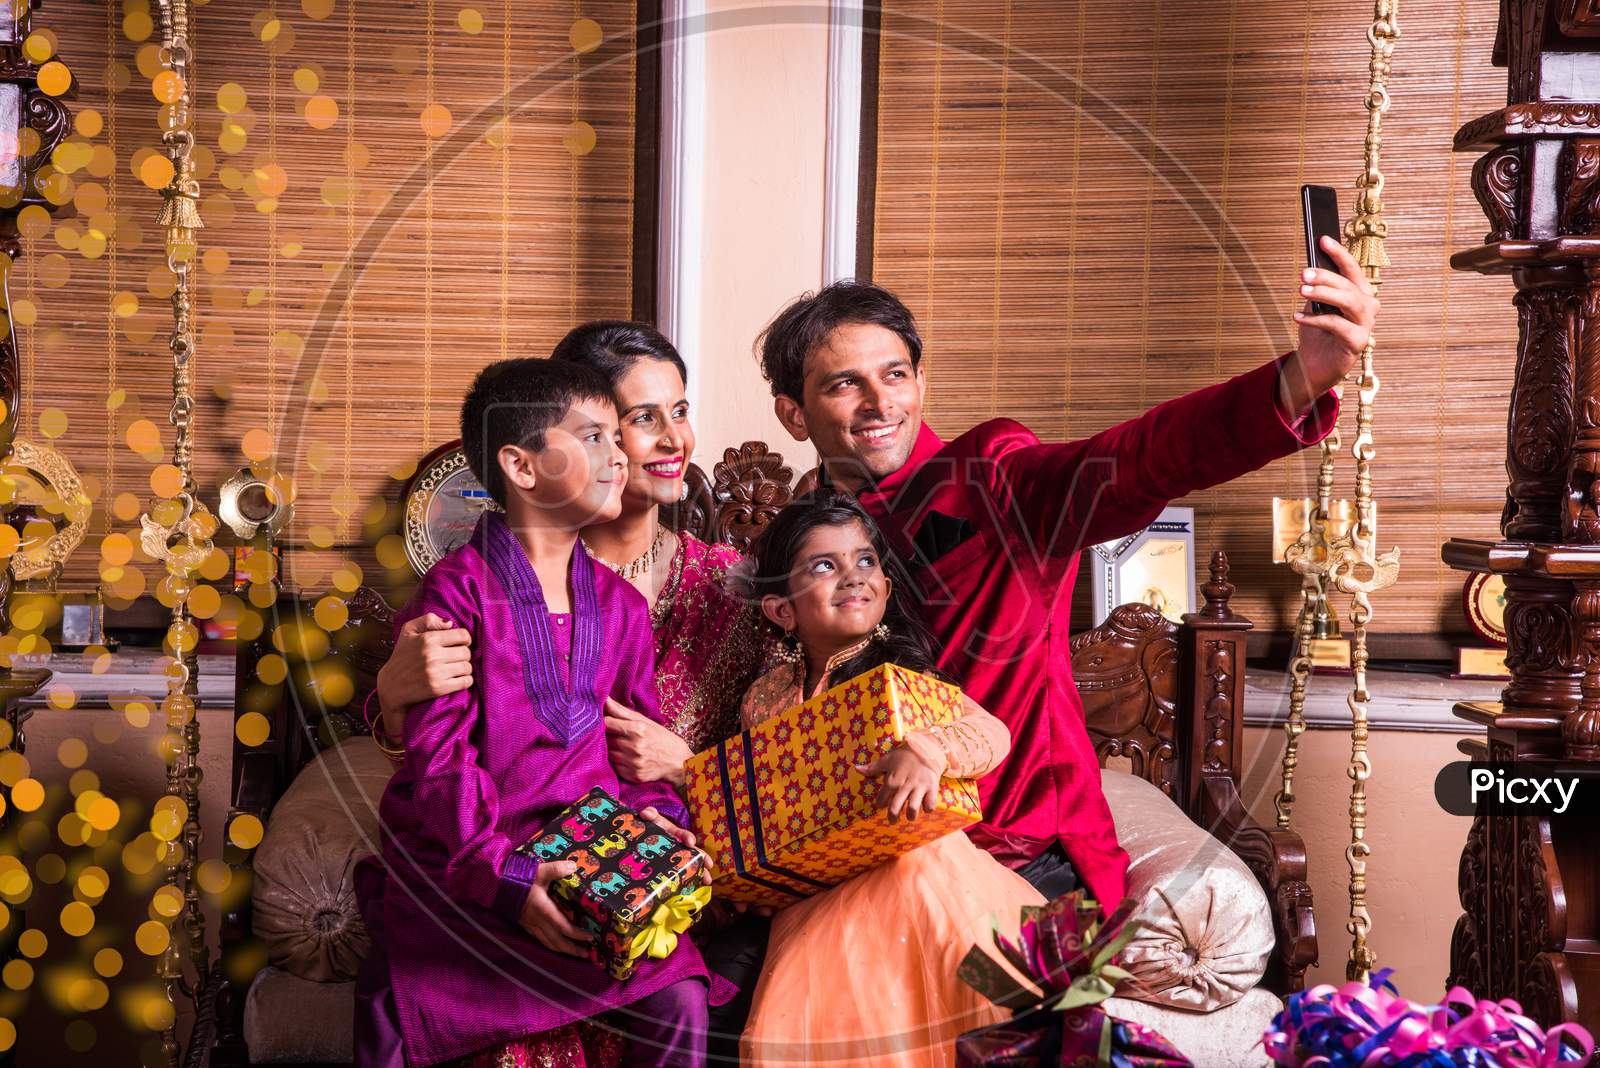 Indian Family celebrating Diwali festival